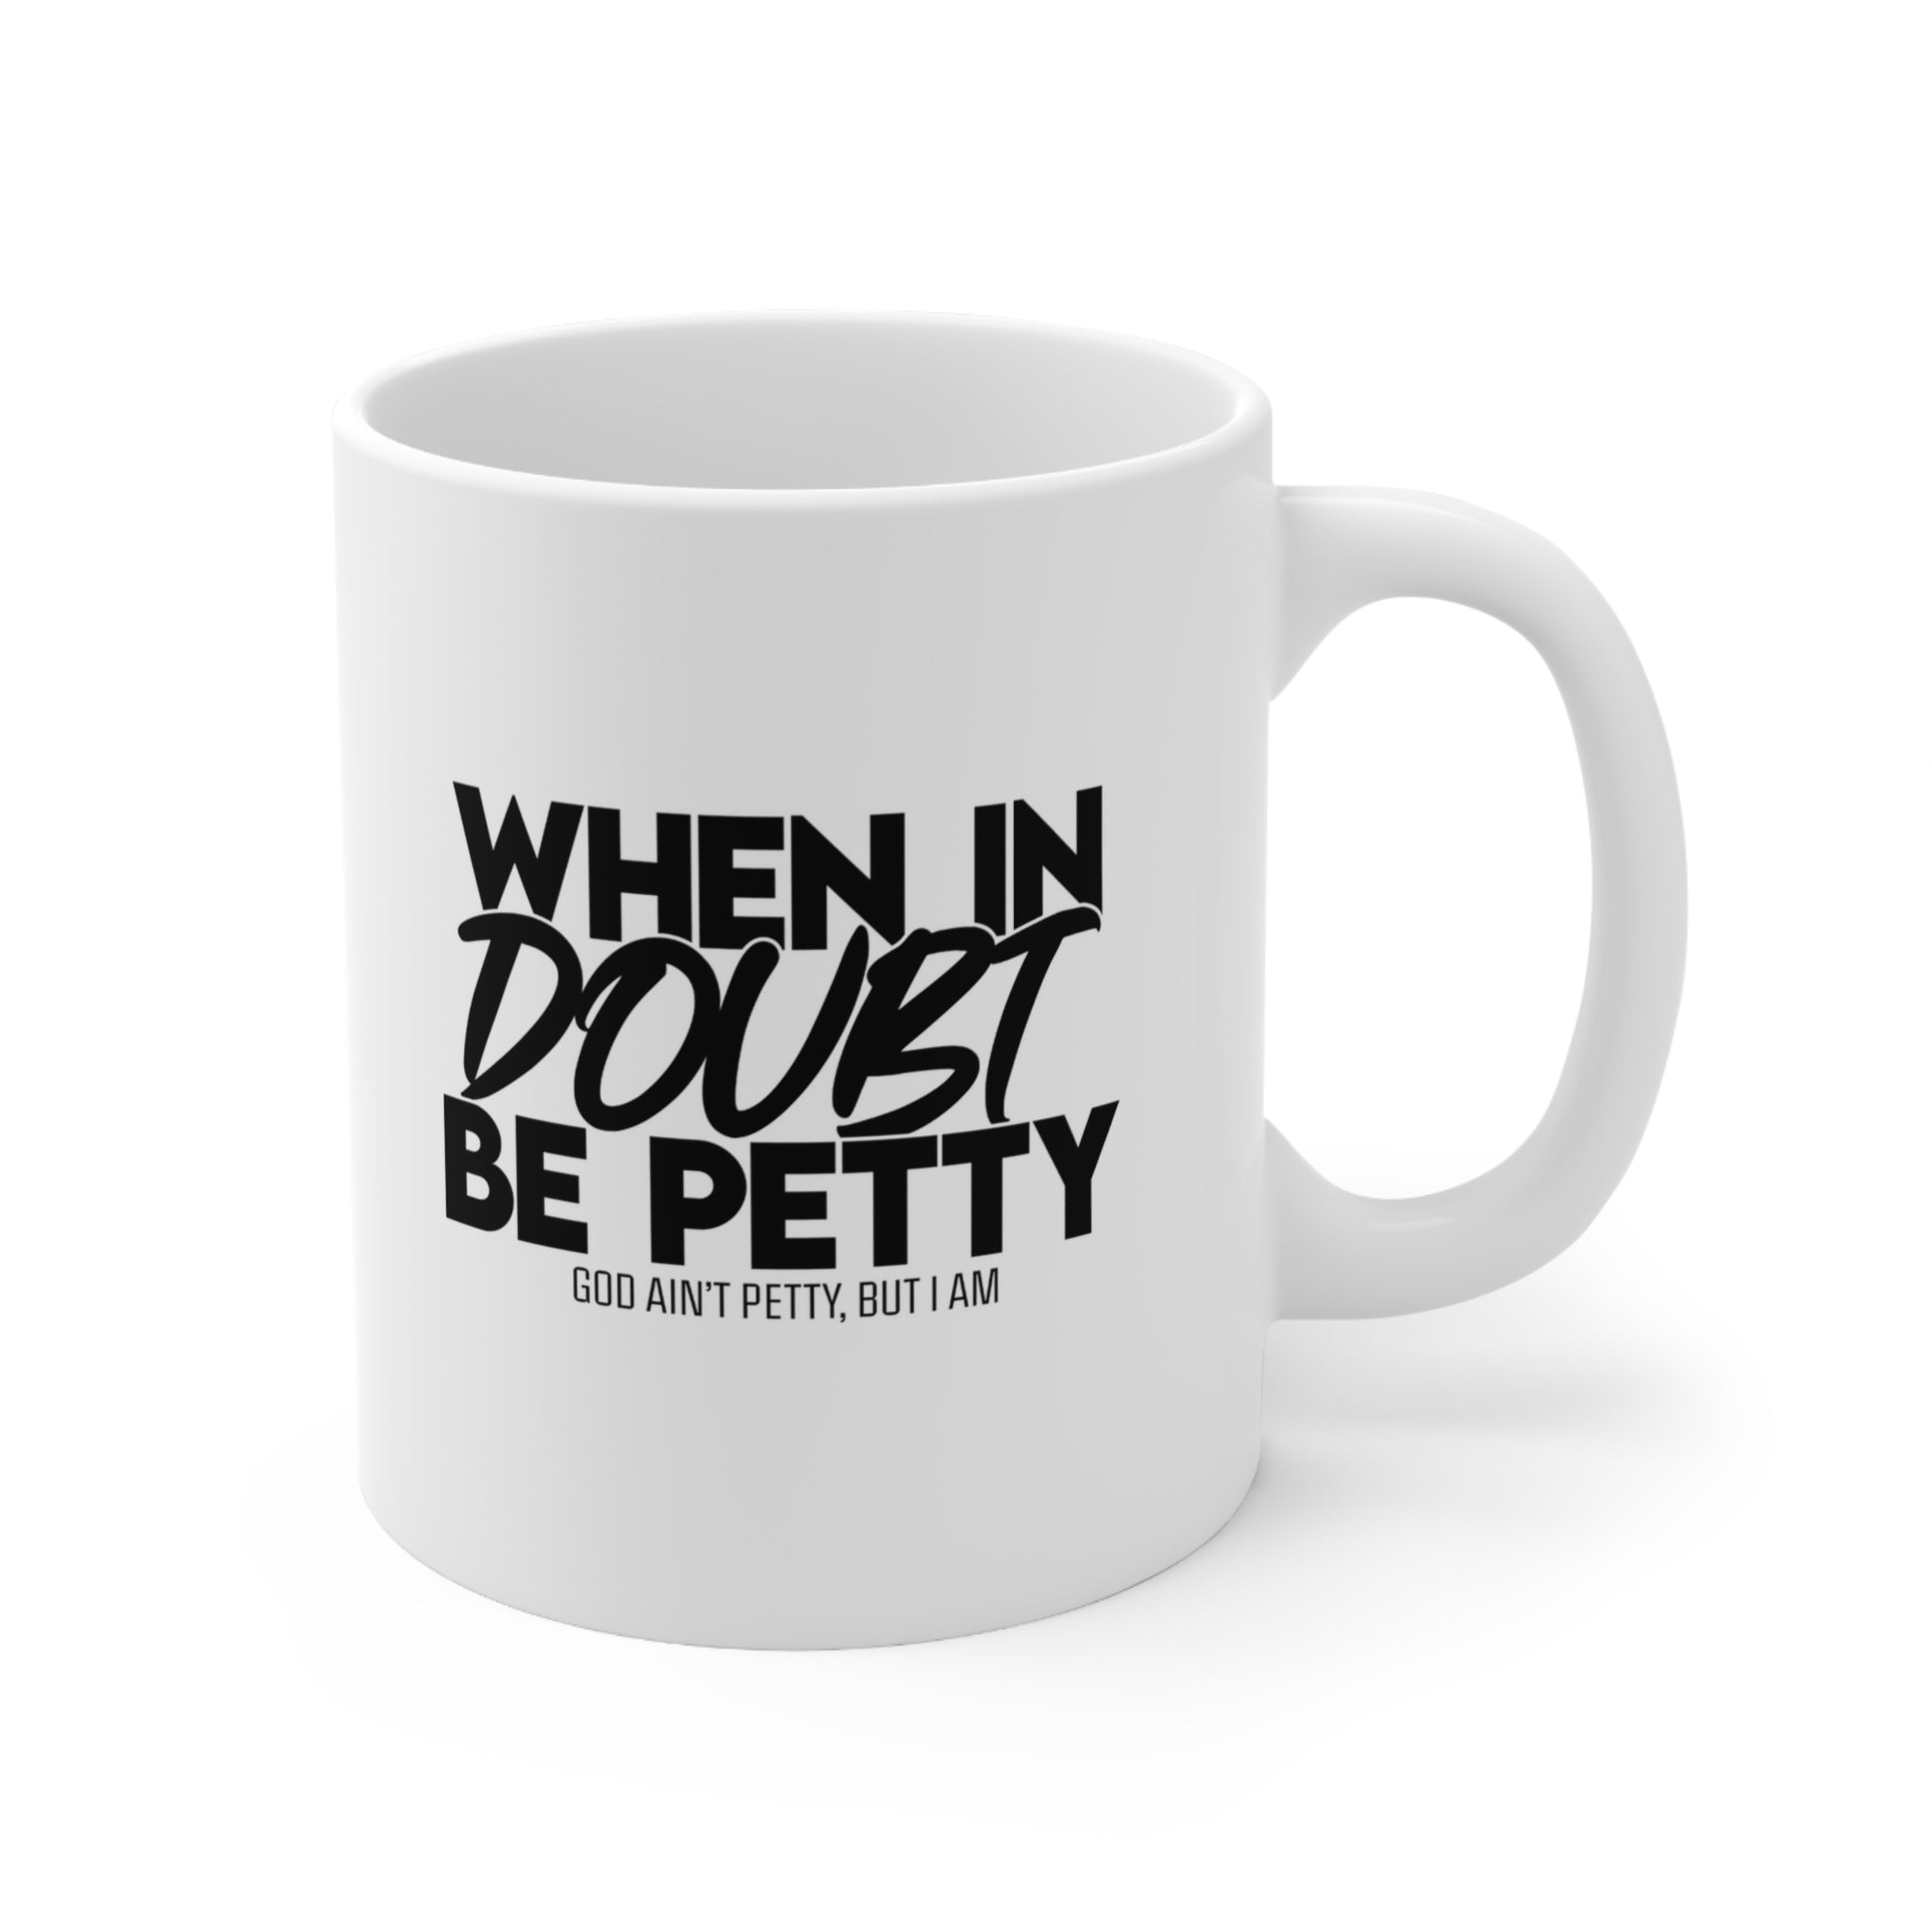 When in doubt be petty Mug 11oz (White/Black)-Mug-The Original God Ain't Petty But I Am